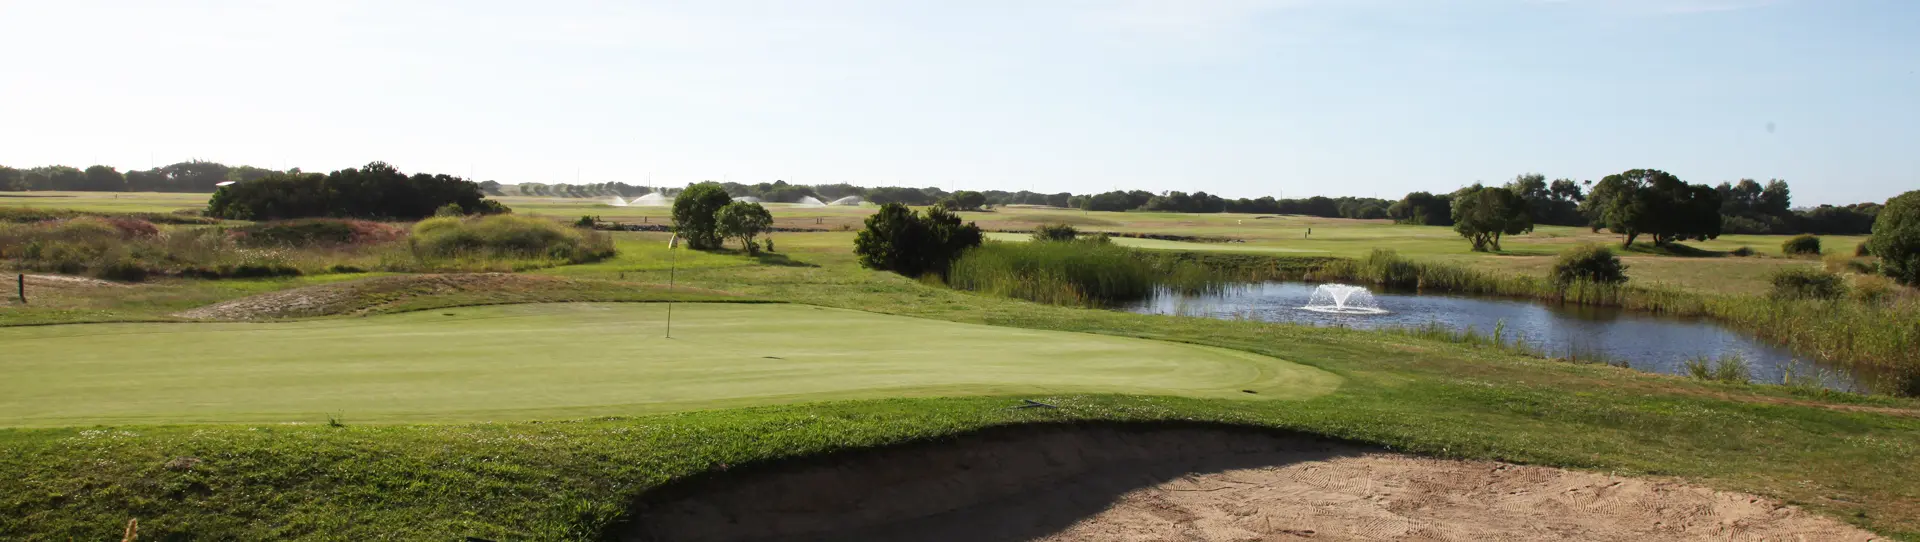 Portugal golf courses - Oporto Golf Club - Photo 1